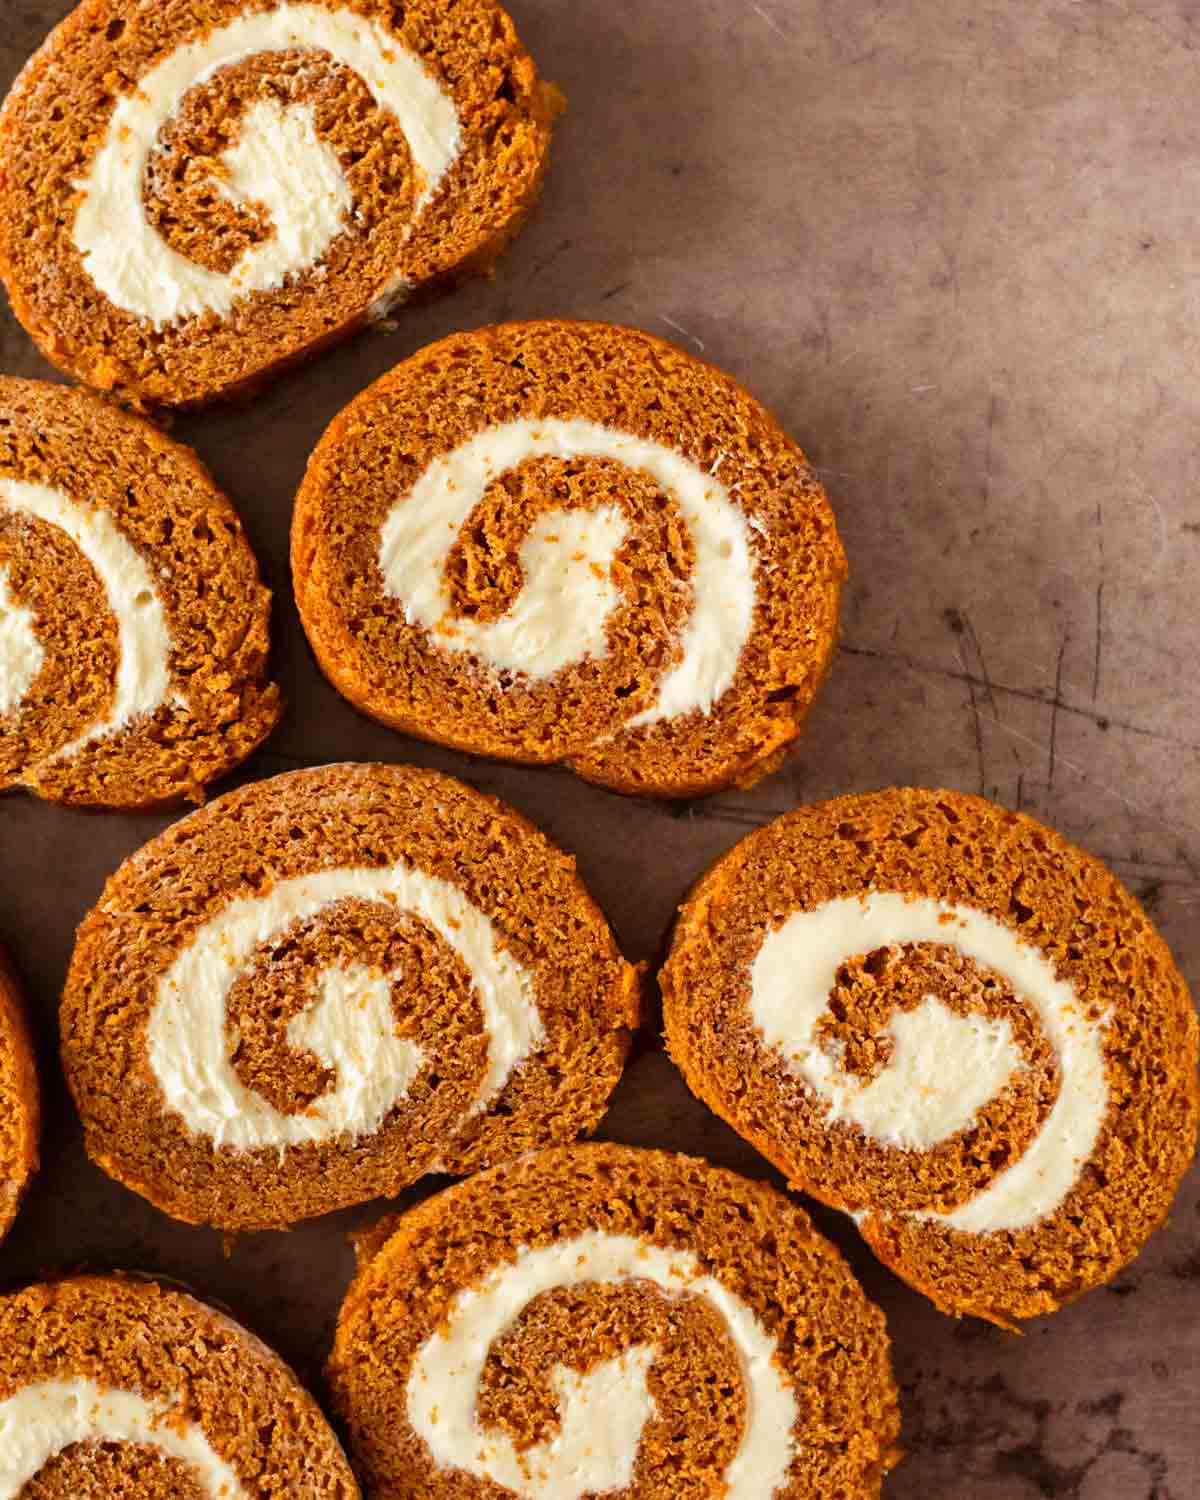 How to make pumpkin roll - Pumpkin roll with orange cream cheese recipe